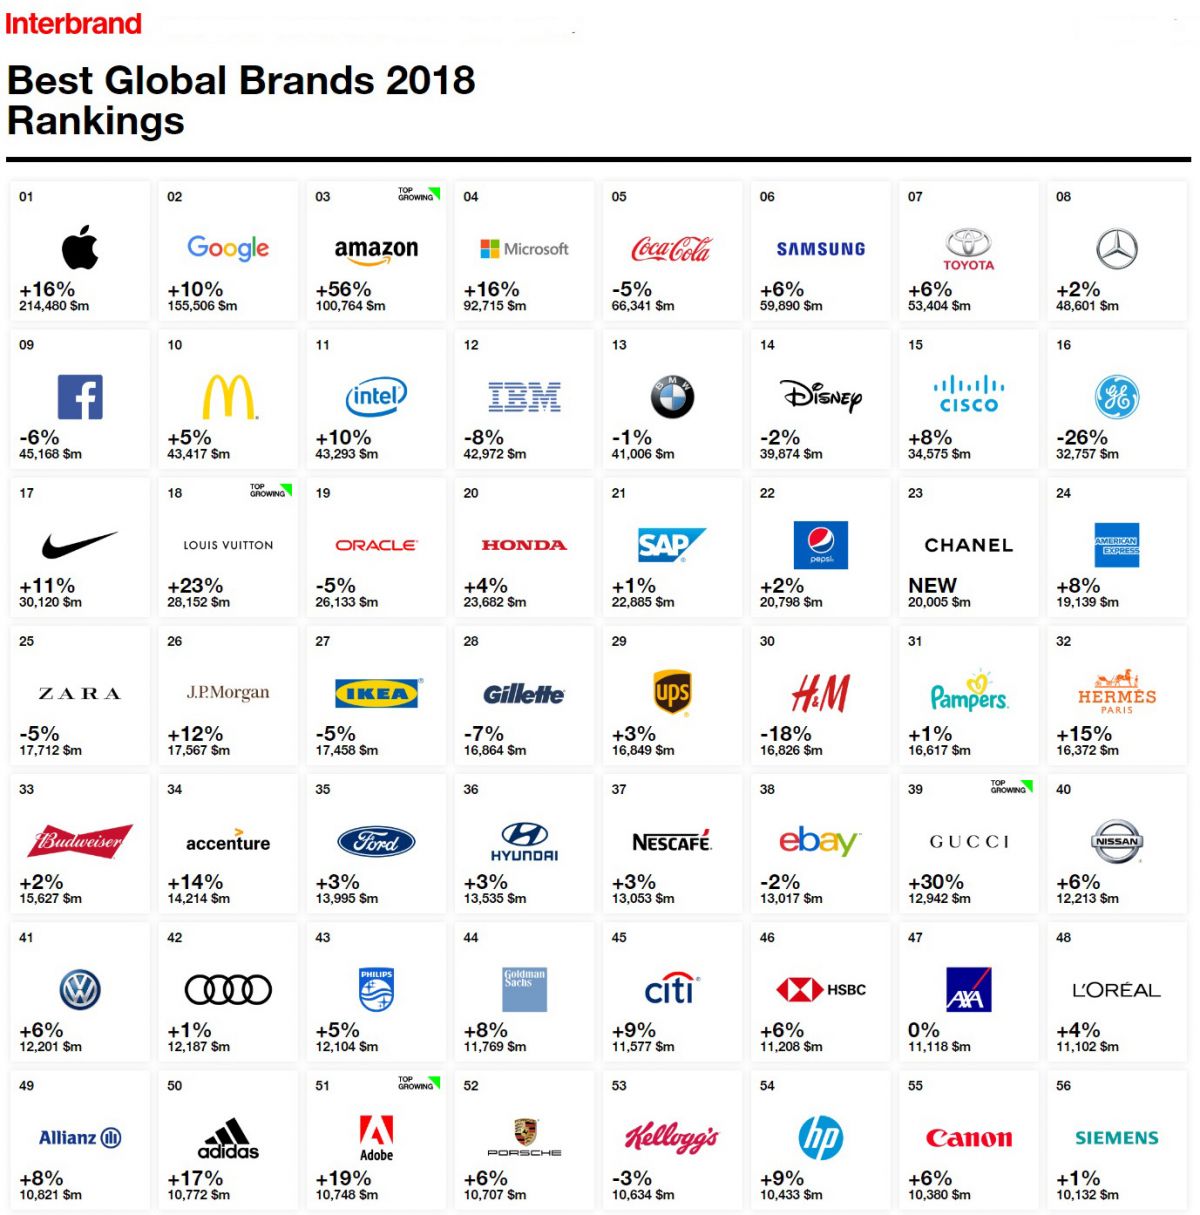 Interbrand Best Global Brands 2018-part 1 - Paul Tan's Automotive News